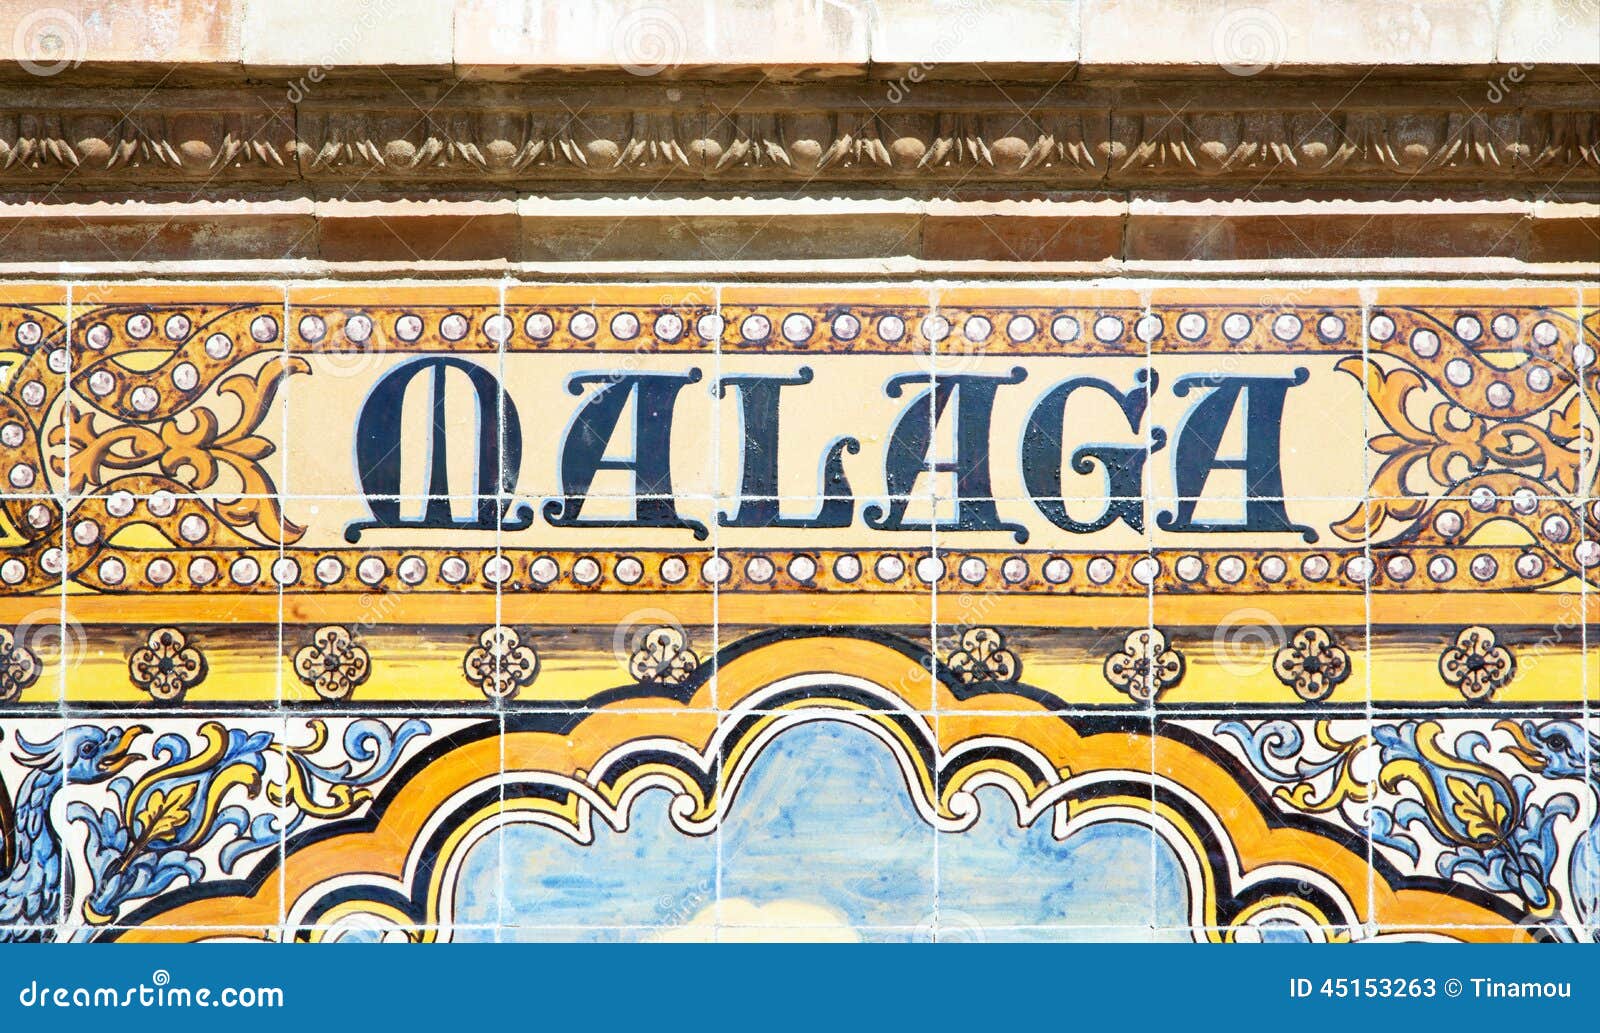 malaga written on azulejos